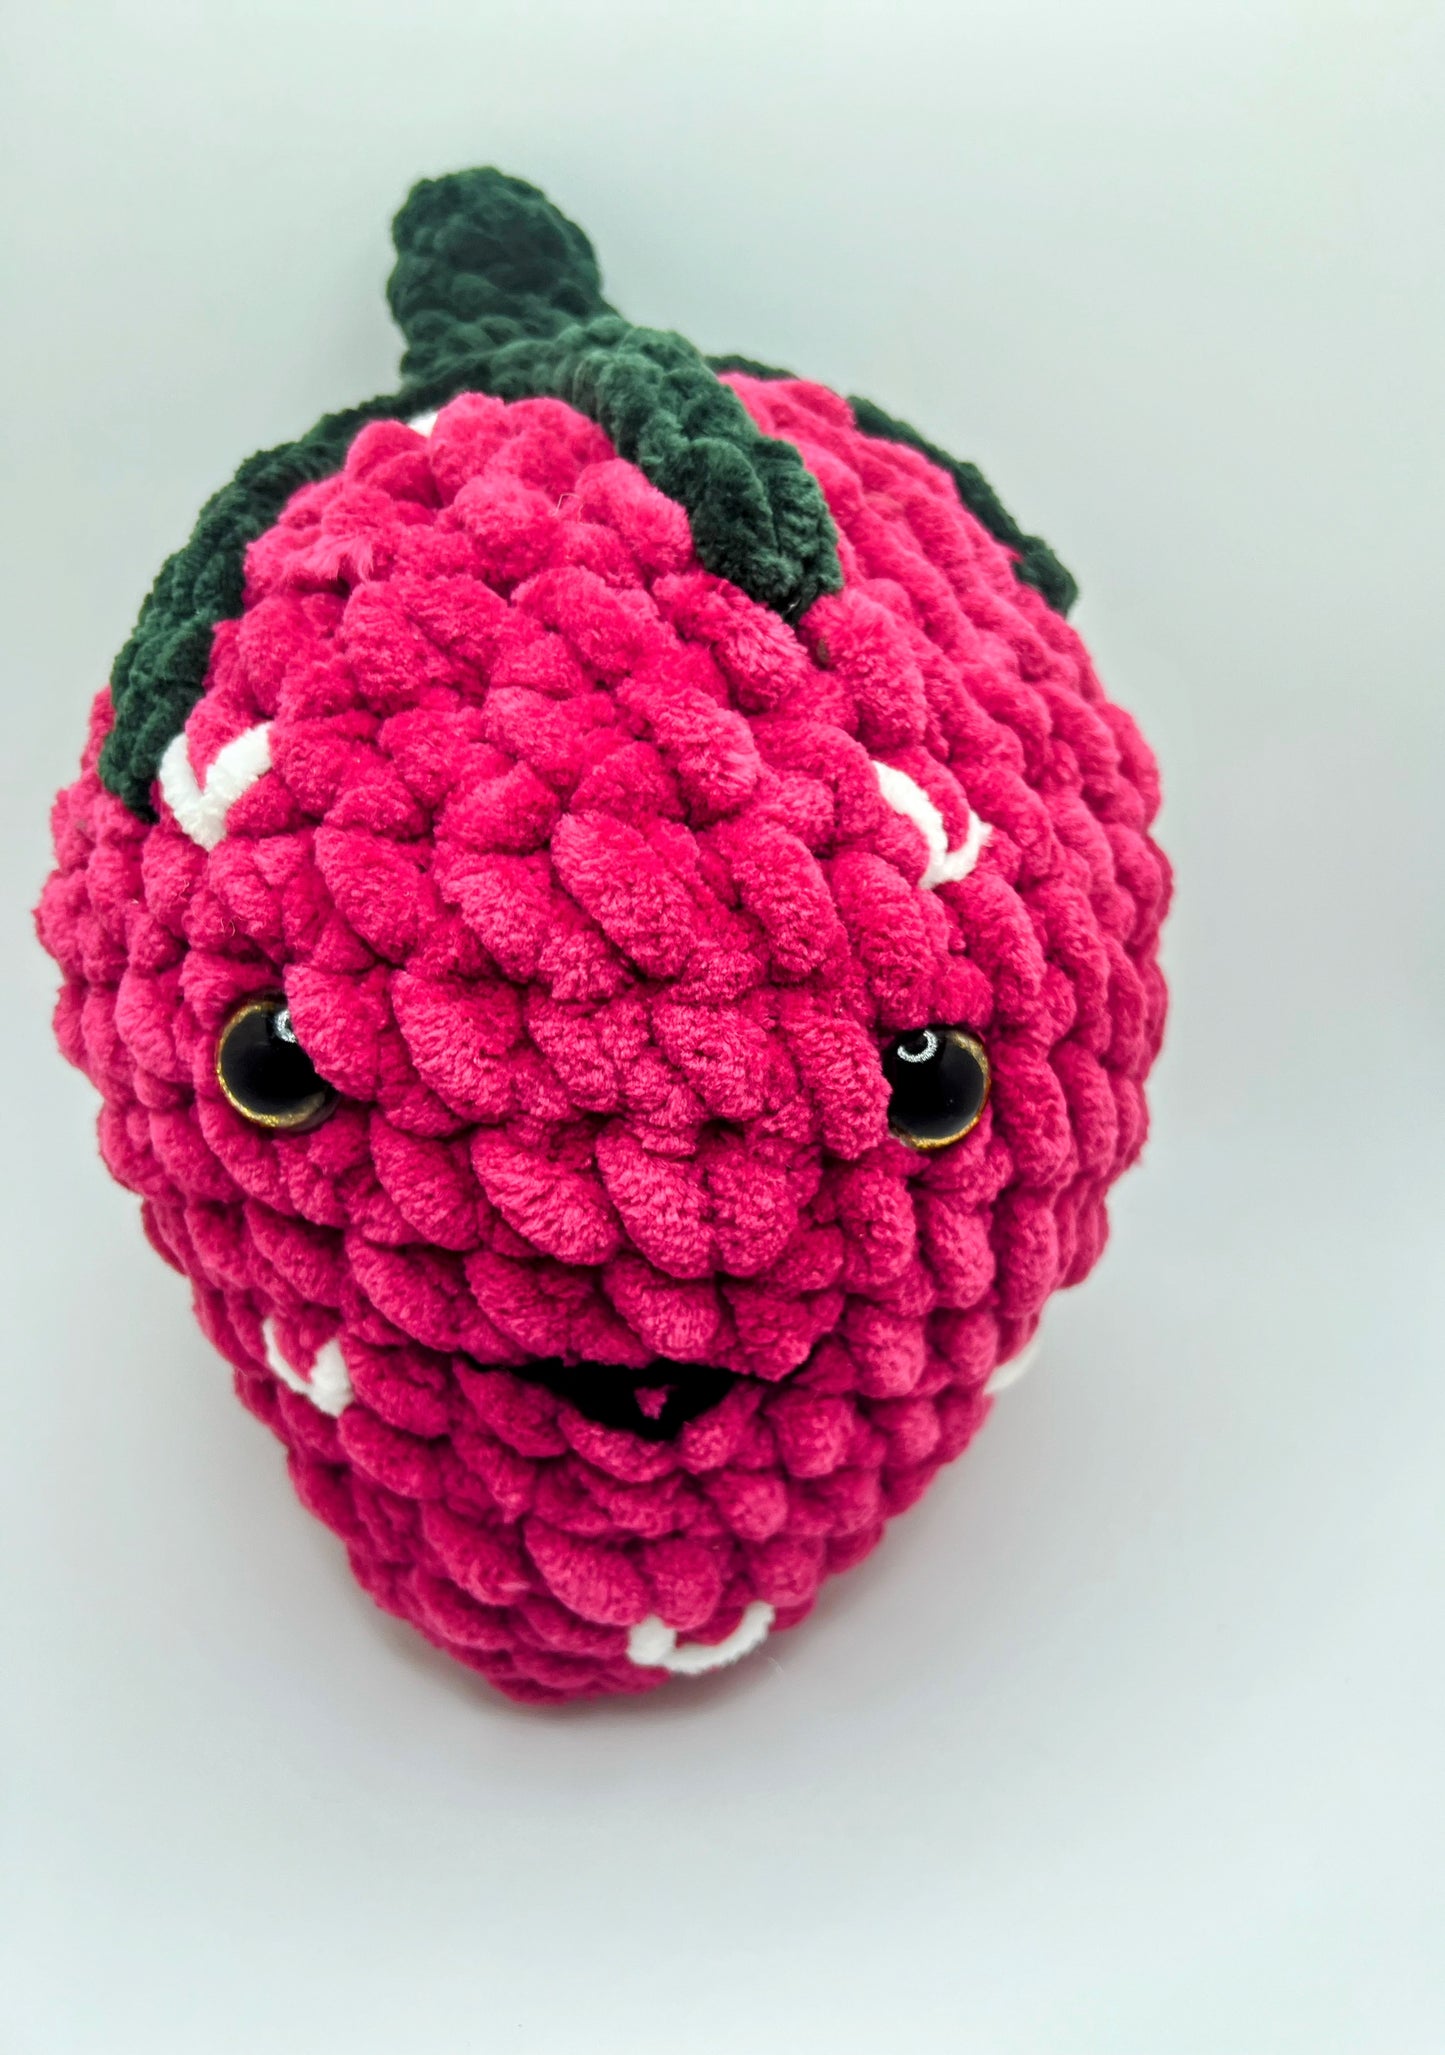 Stuffed Big  Pink Strawberry 🍓 - Crochet Knitted Amigurumi Toy